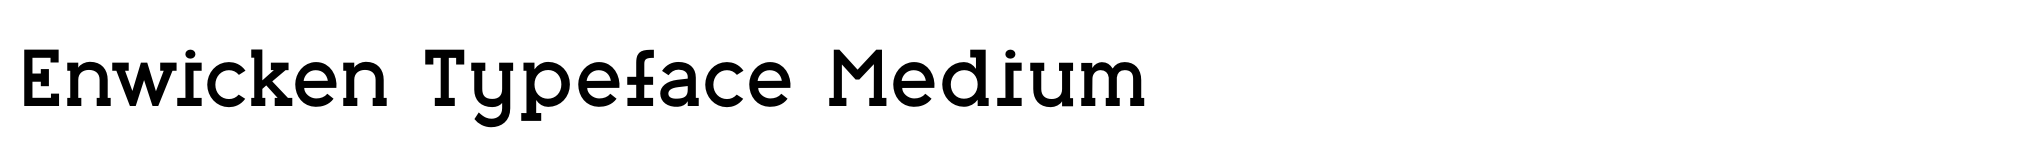 Enwicken Typeface Medium image